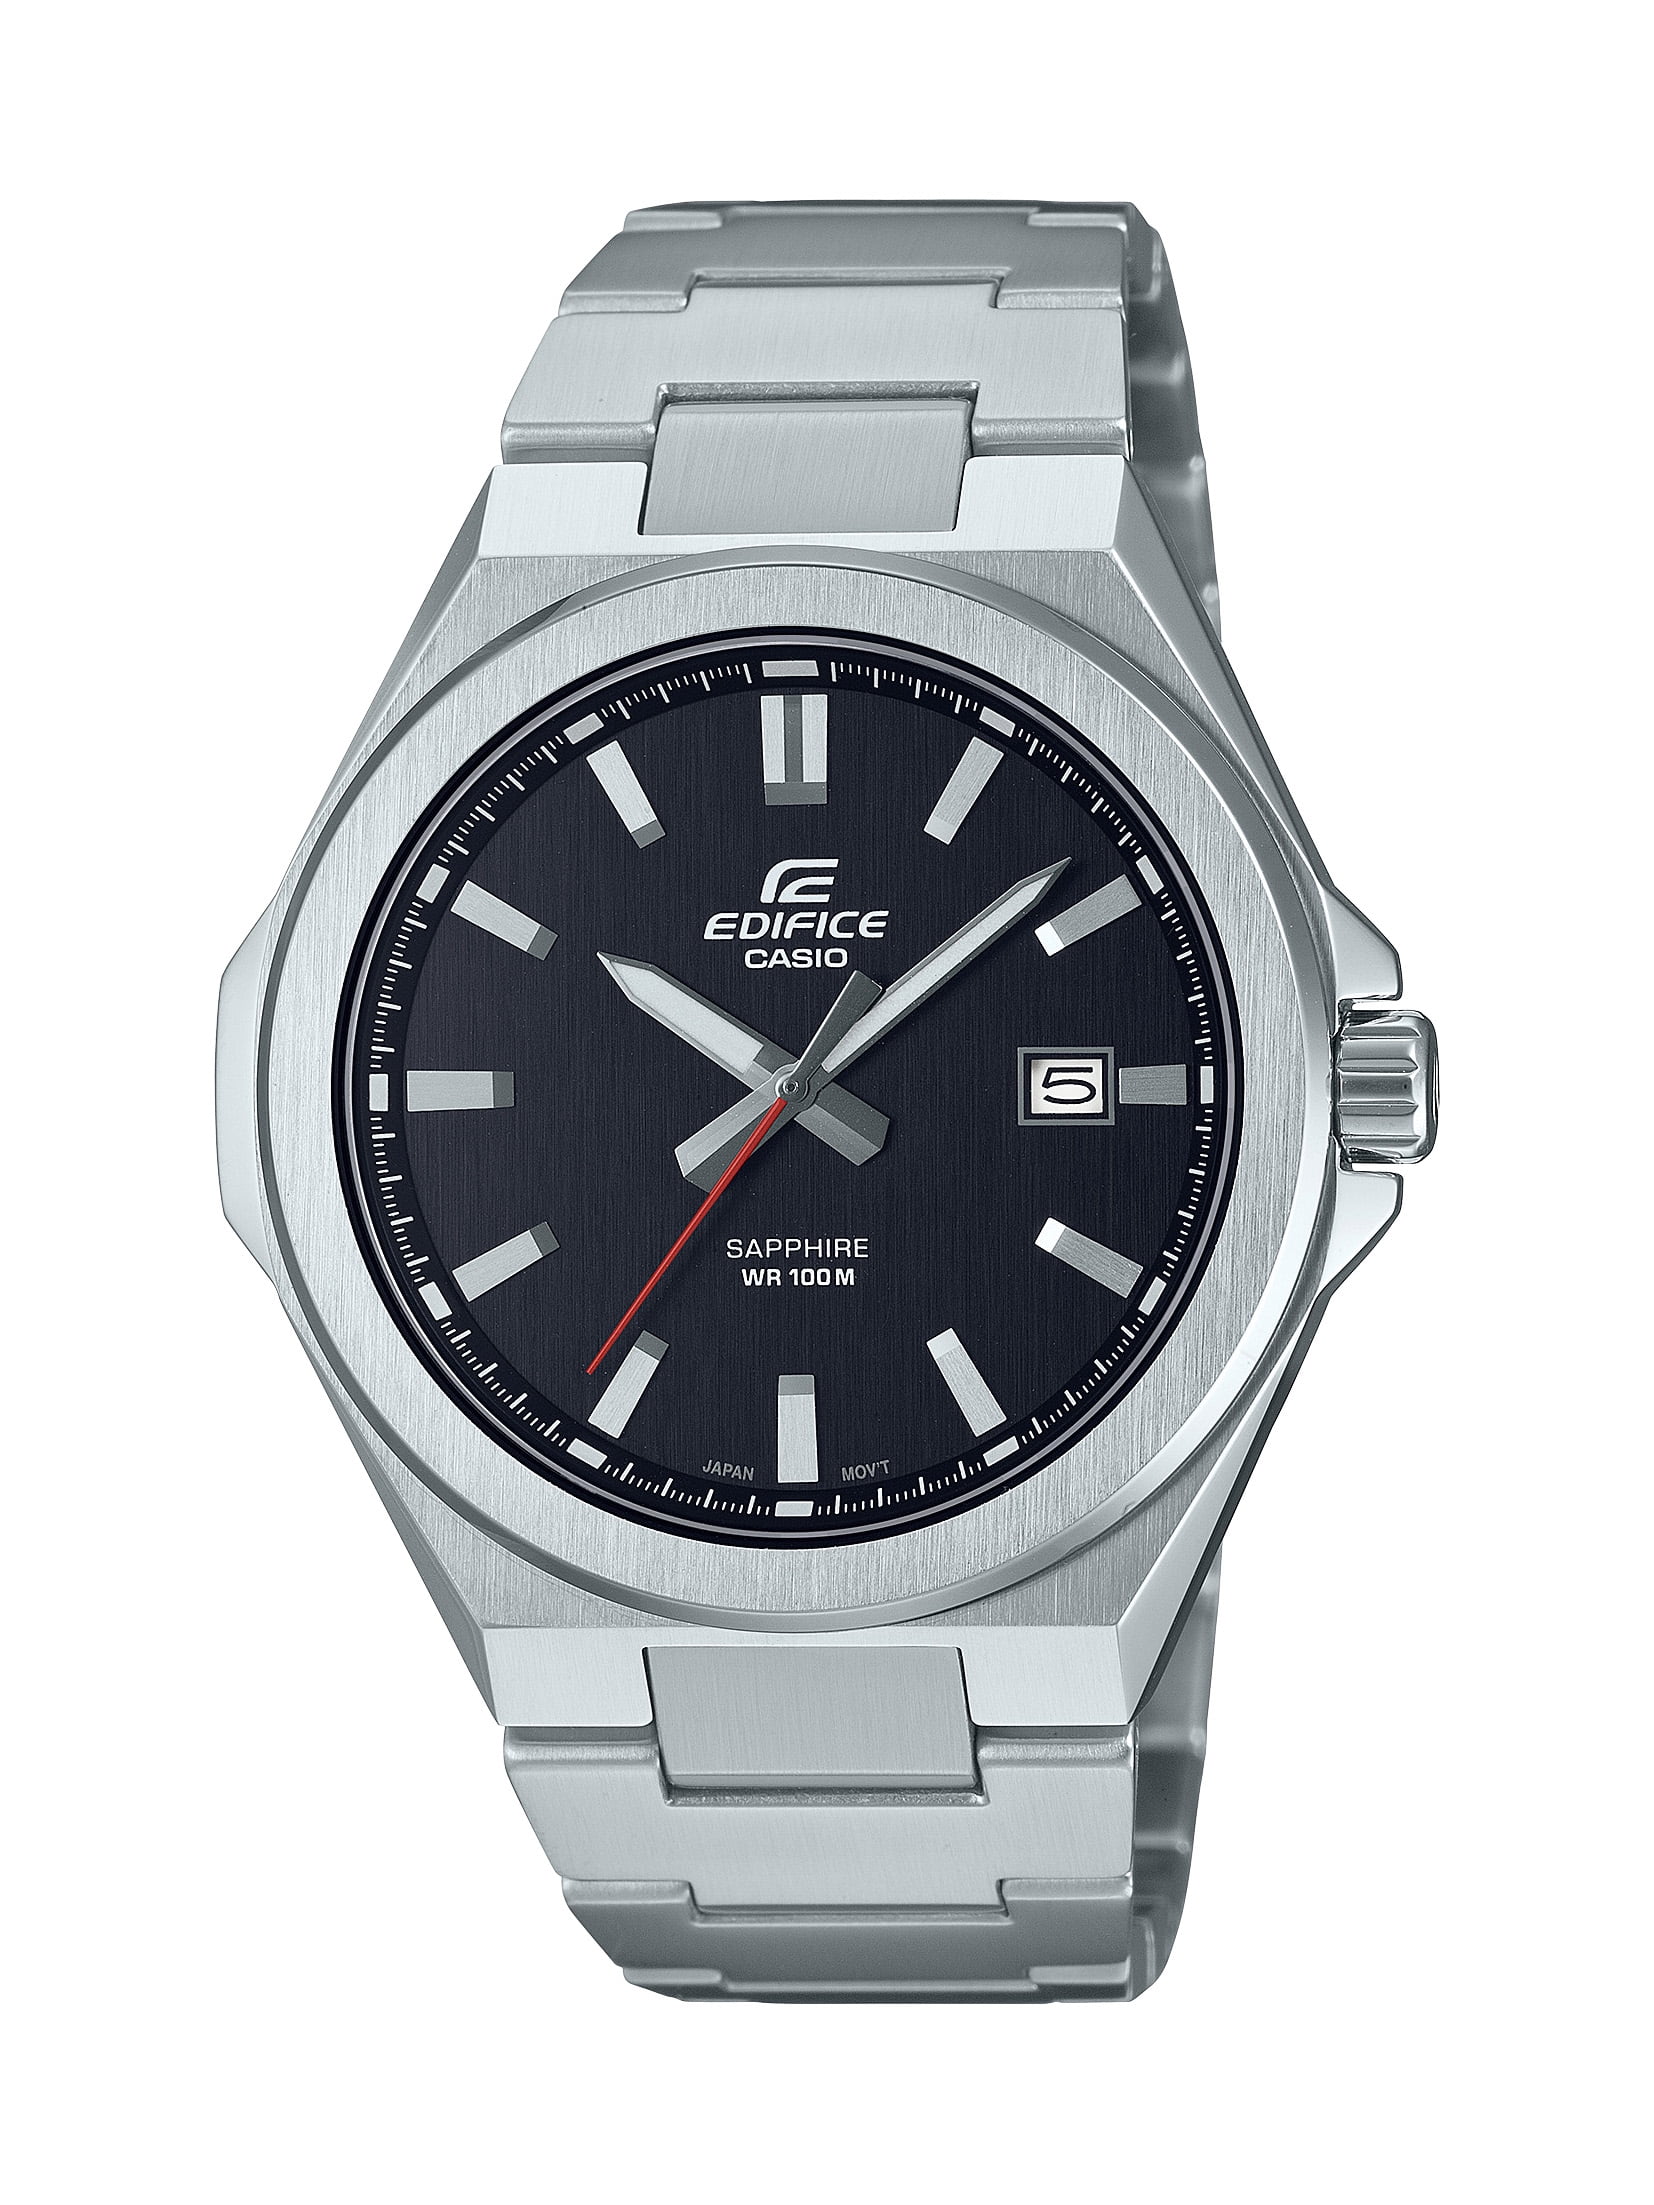 Casio Men's Edifice Classic Stainless Steel Bracelet Watch with Black Dial  - EFB108D-1AV